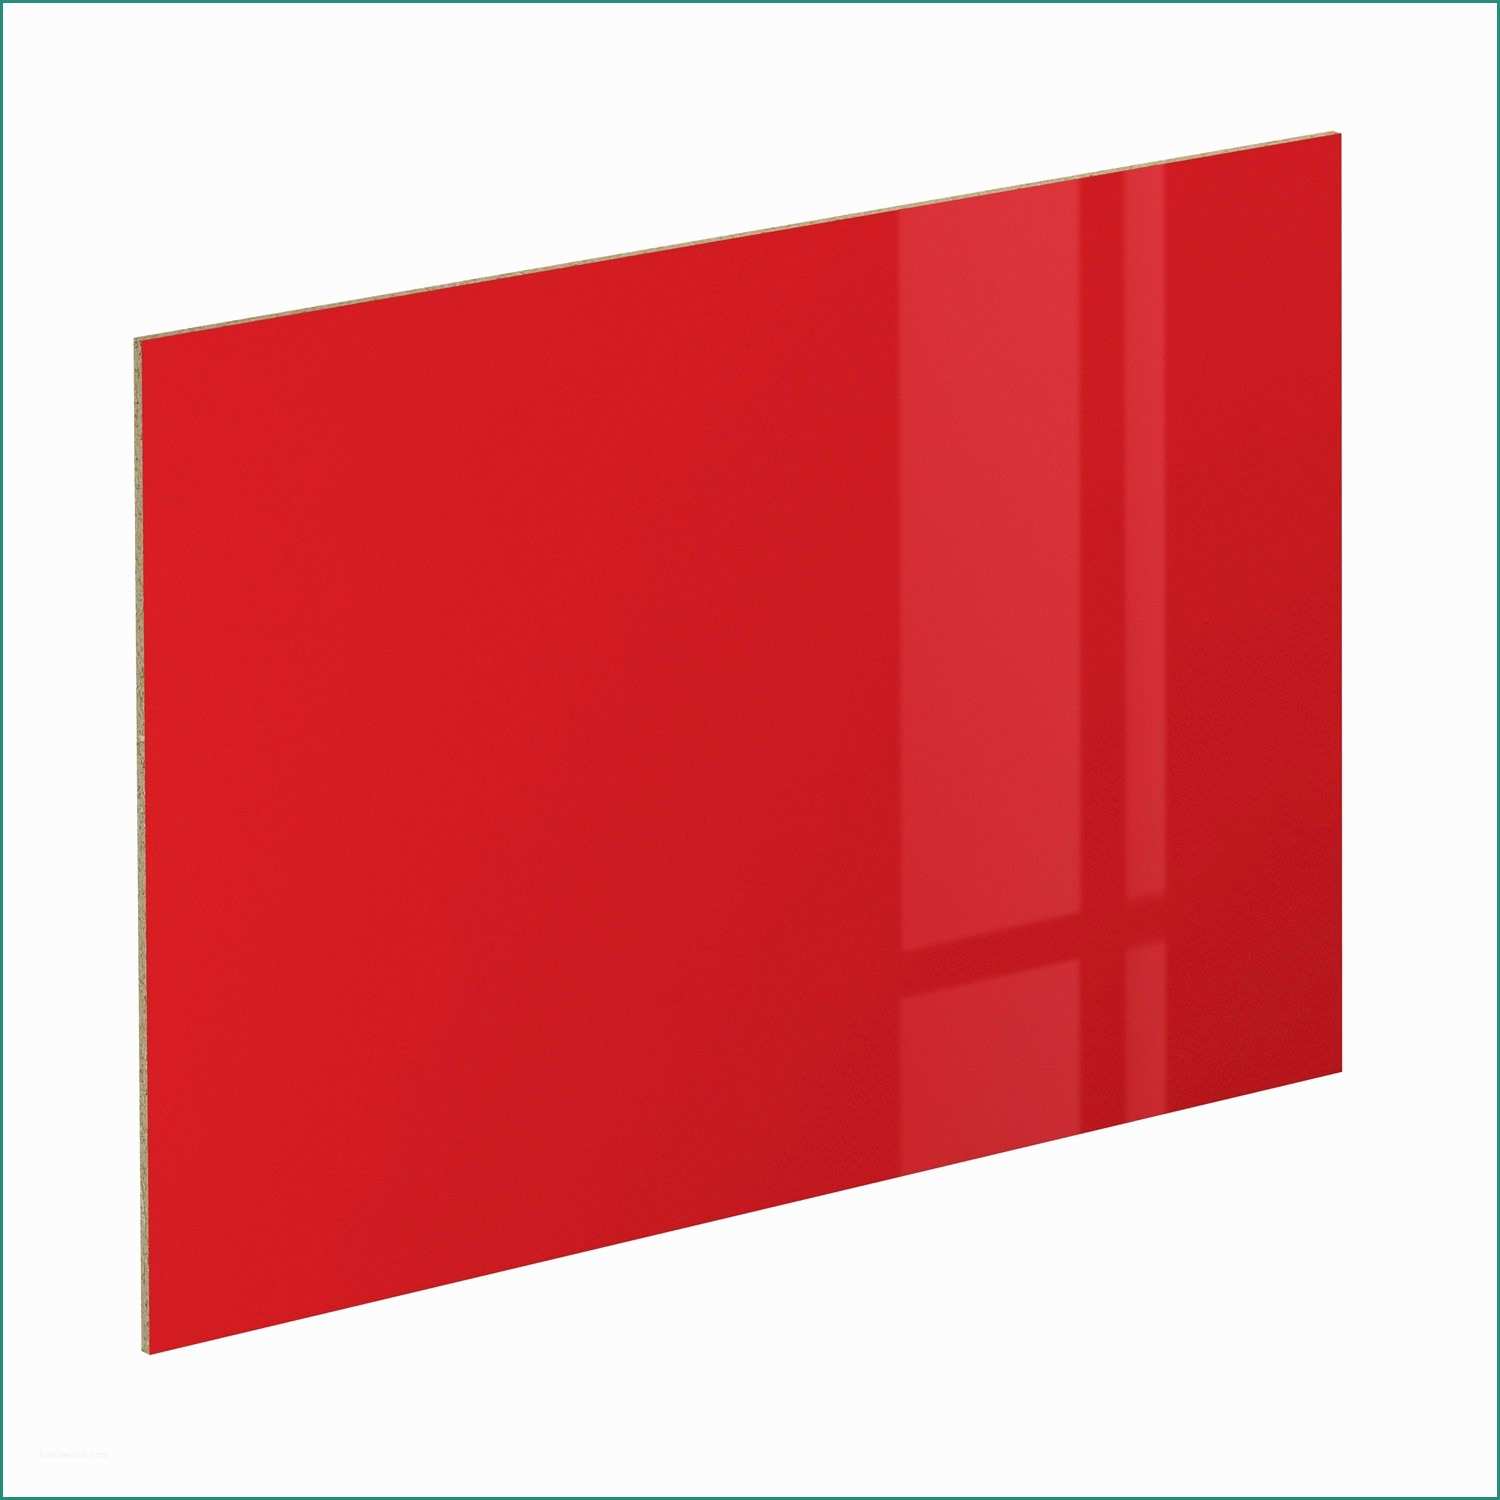 Plexiglass Colorato Leroy Merlin E Panneau Glossy Rouge Spaceo L 96 9 X H 61 4 Cm